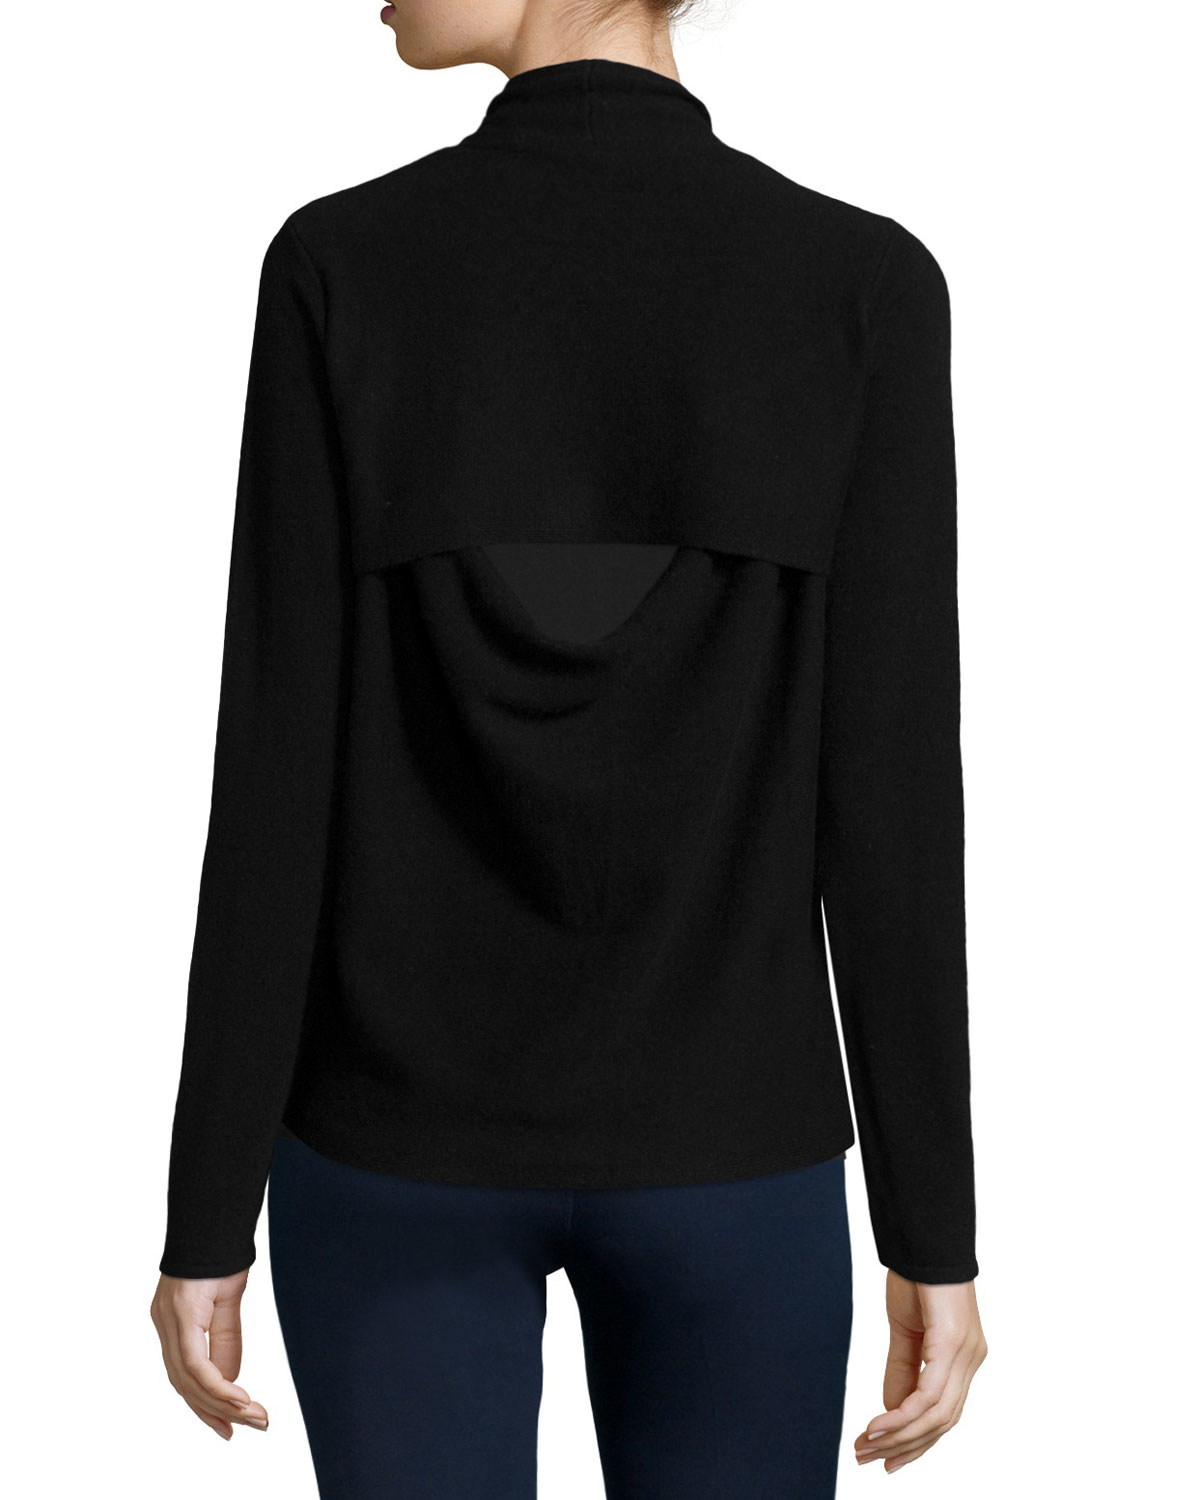 Elie tahari Stori Cashmere Open-front Sweater in Black | Lyst